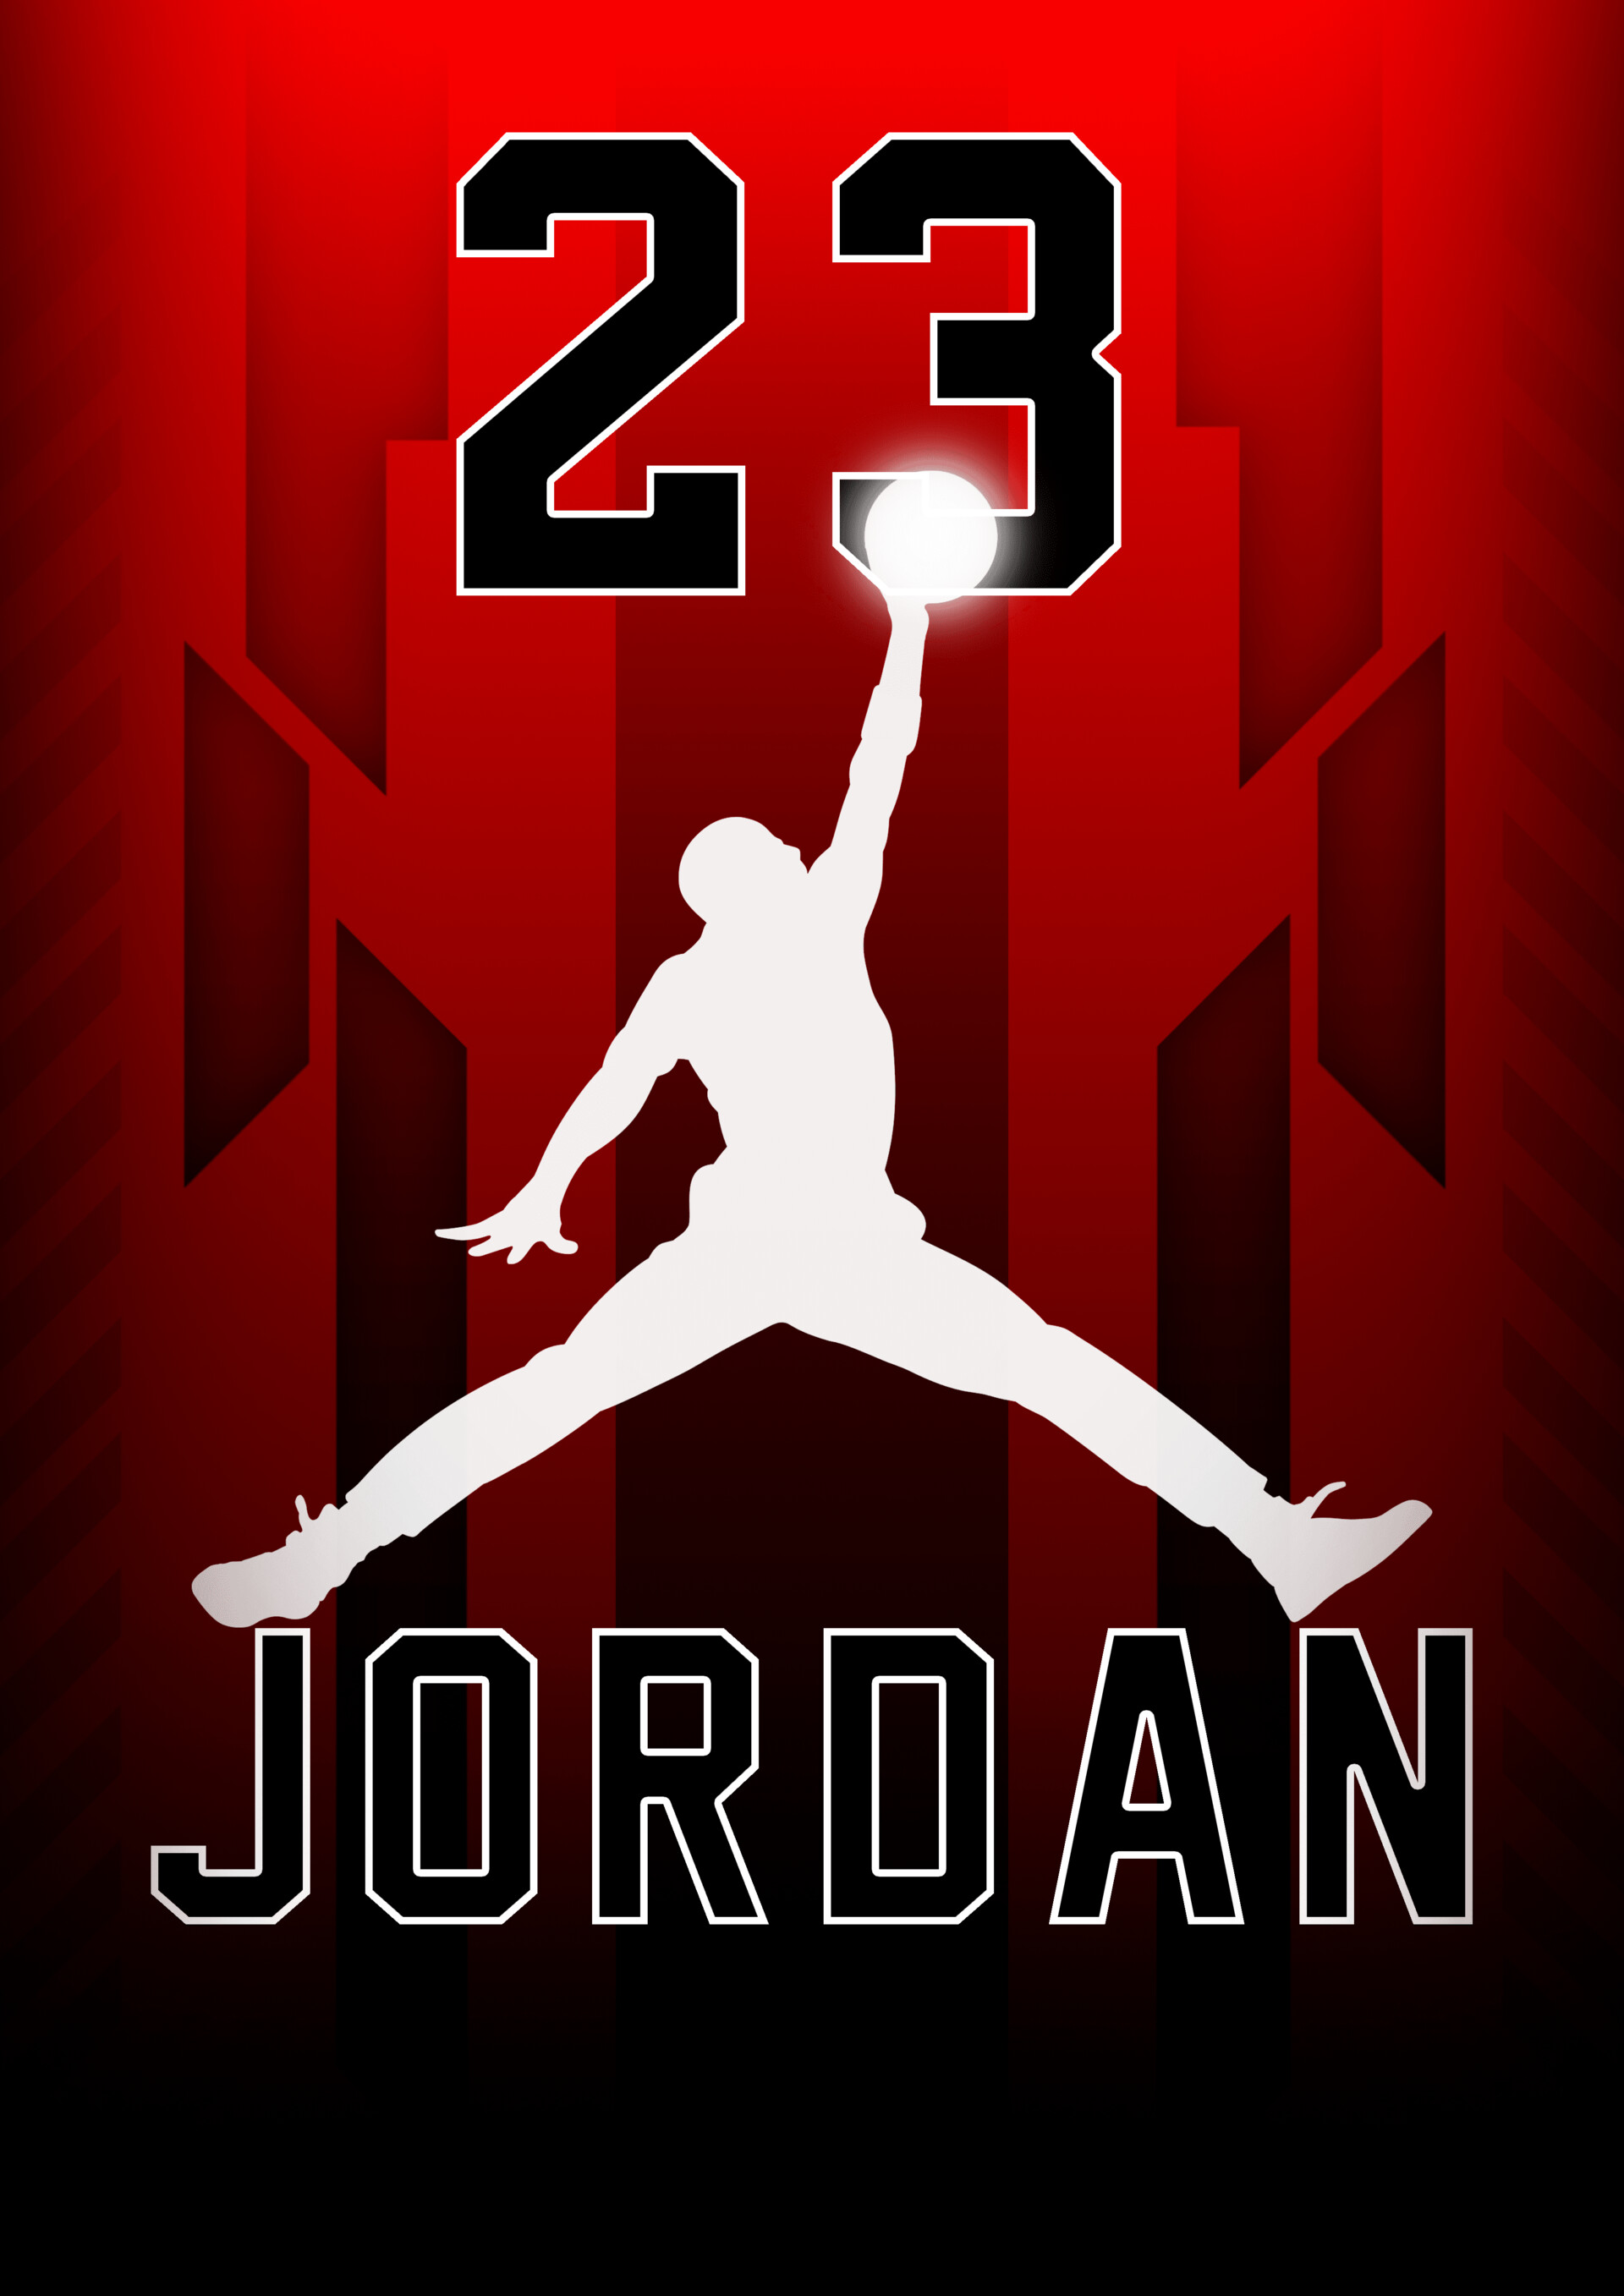 ArtStation - Michael Jordan basketball poster